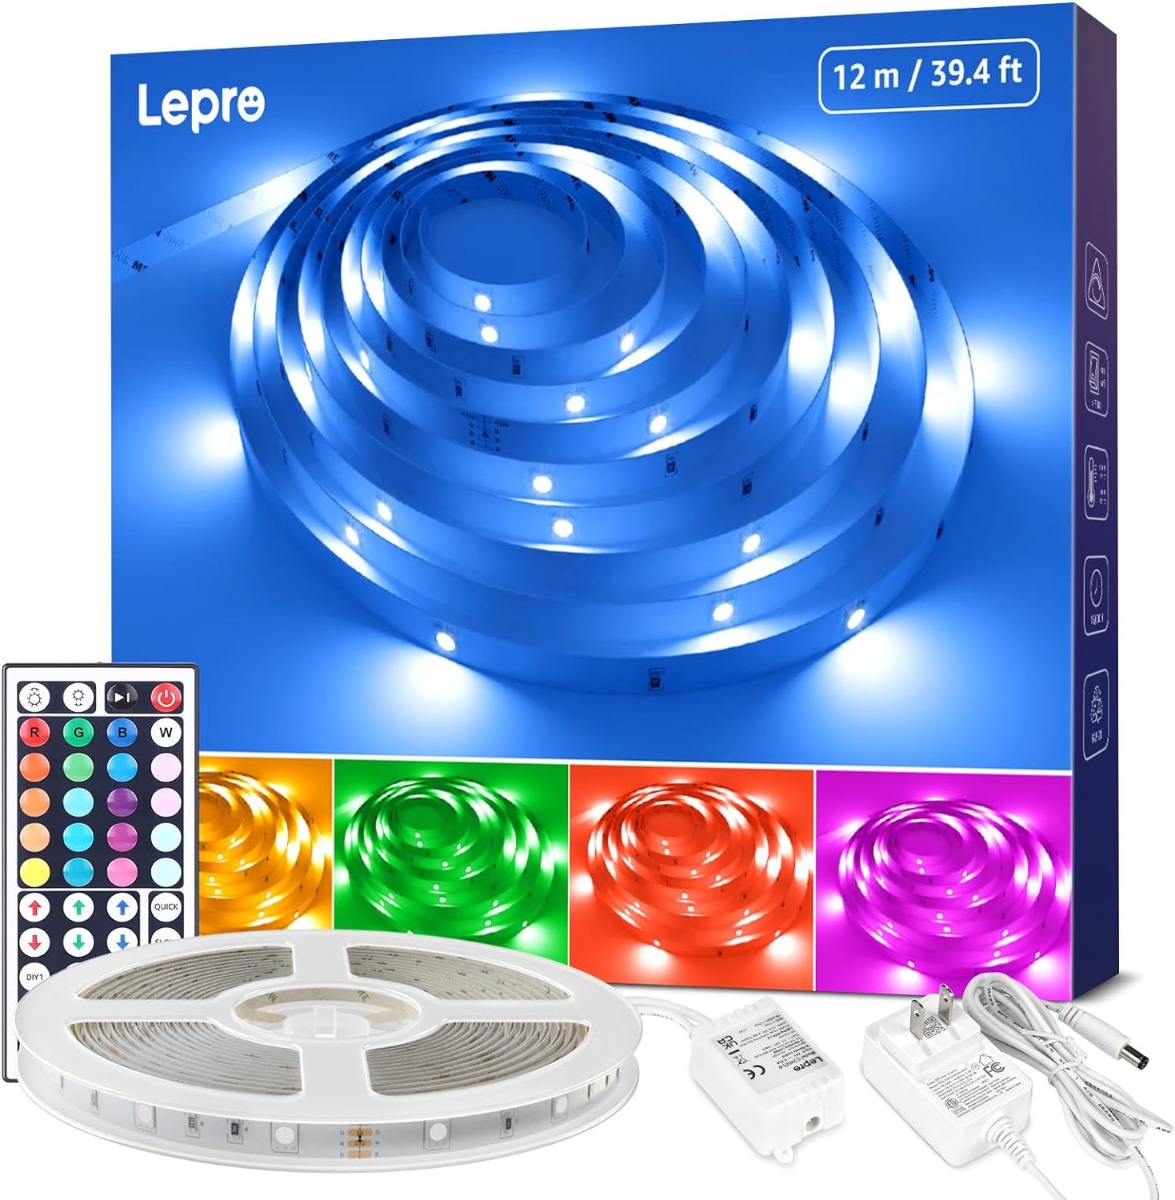 Lepro LED Strip Lights, 39.4Ft RGB LED Strips, 5050 SMD LED Color Changing Strip Light with 44 Keys Remote Controller and 24V Power Supply, Ideal